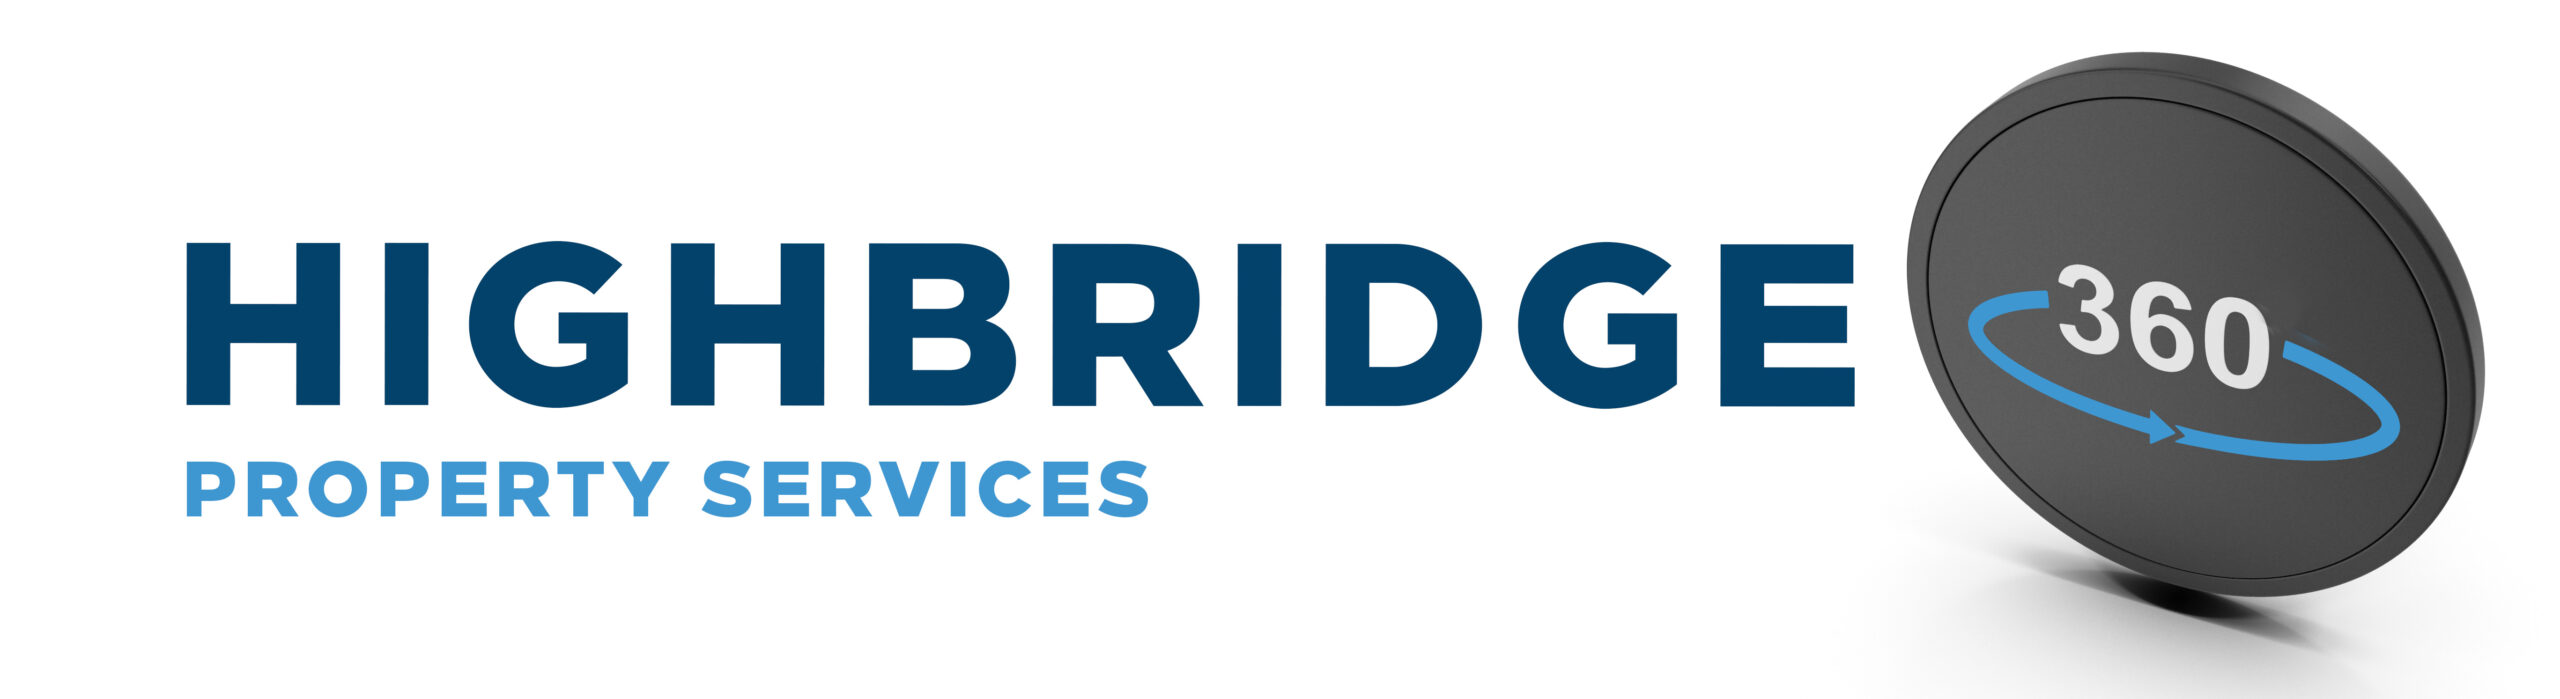 Highbridge Construction Services